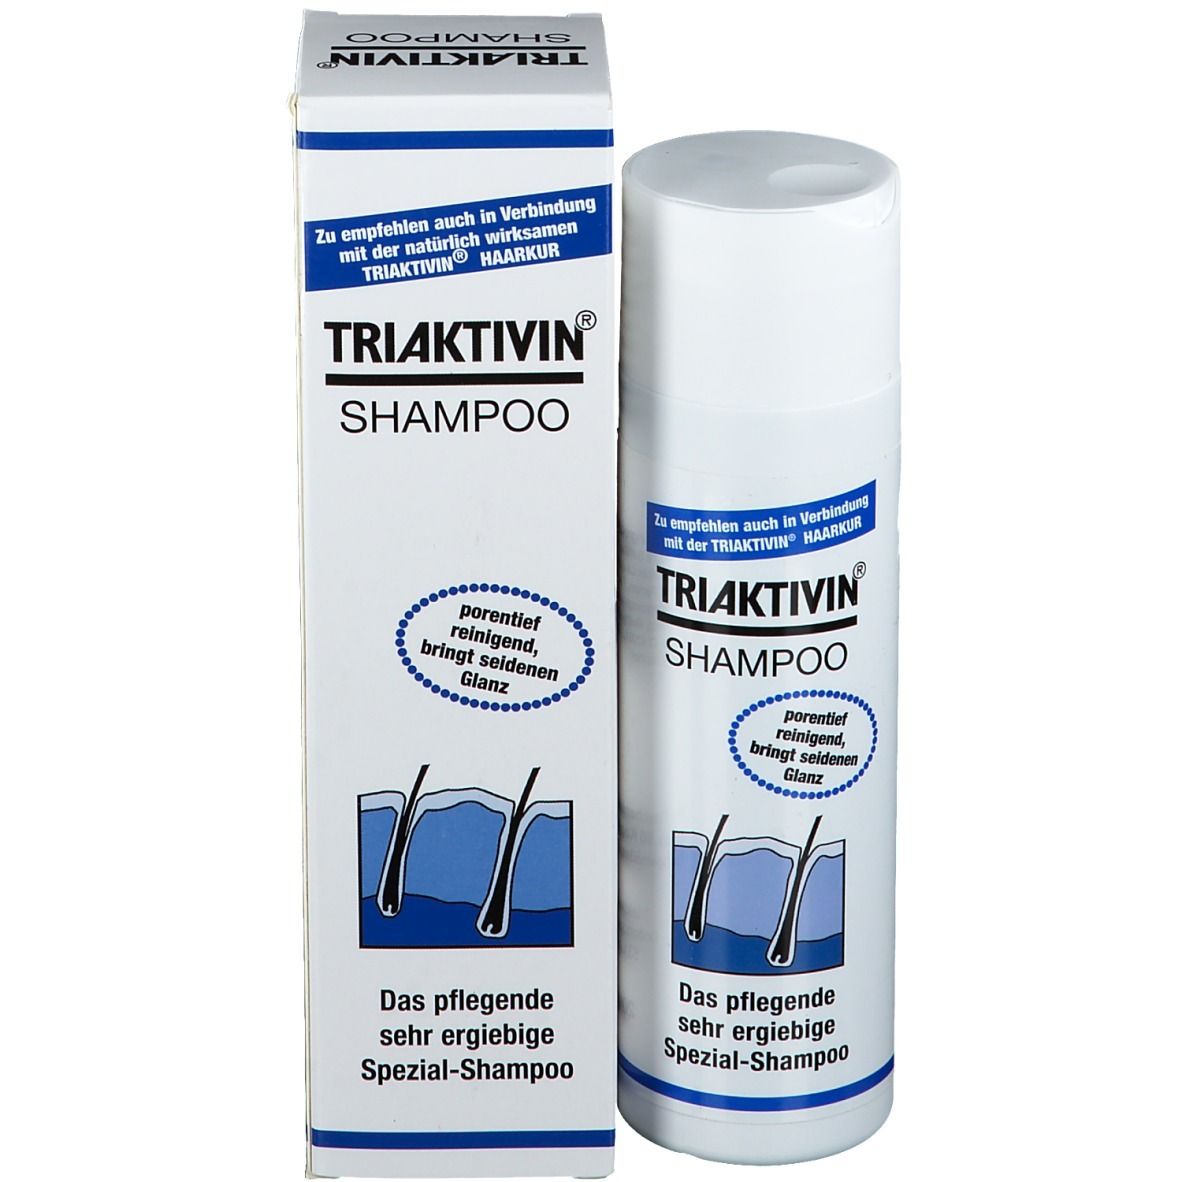 TRIAKTIVIN® Shampoo